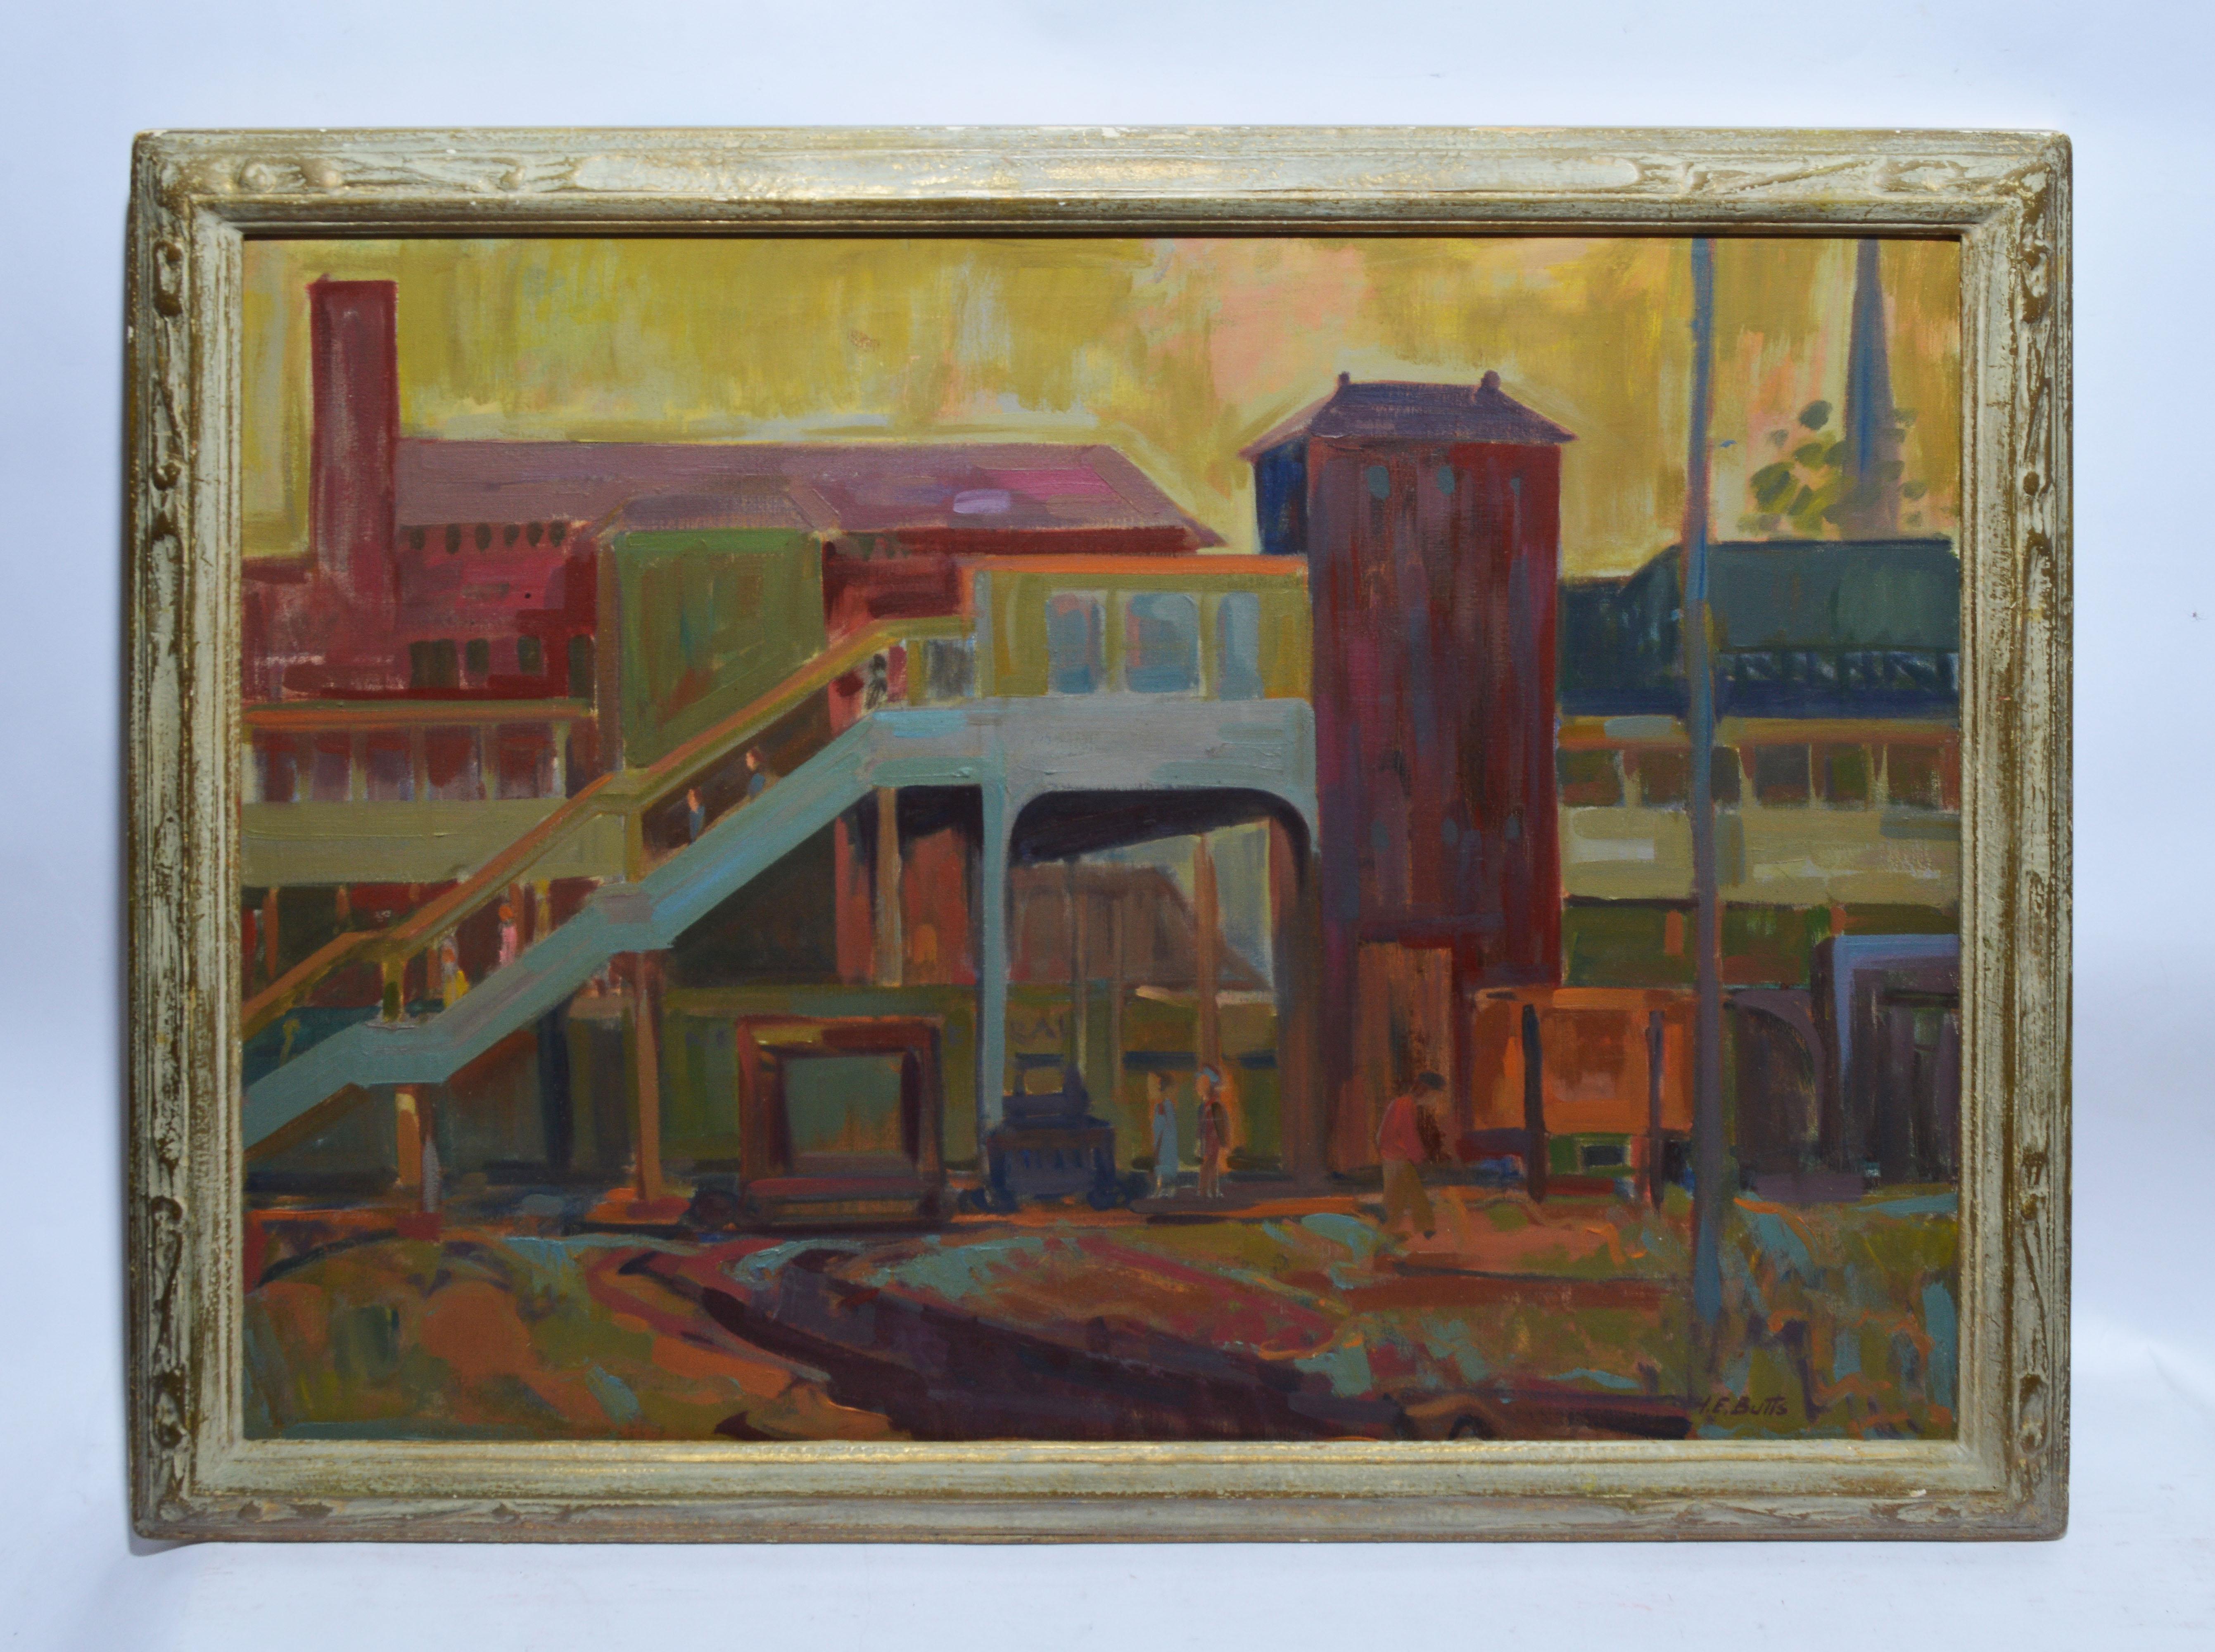 Modernes industrielles Güterbahnhof-abstraktes Stadtbild-Ölgemälde von HE Butts – Painting von H. E. Butts